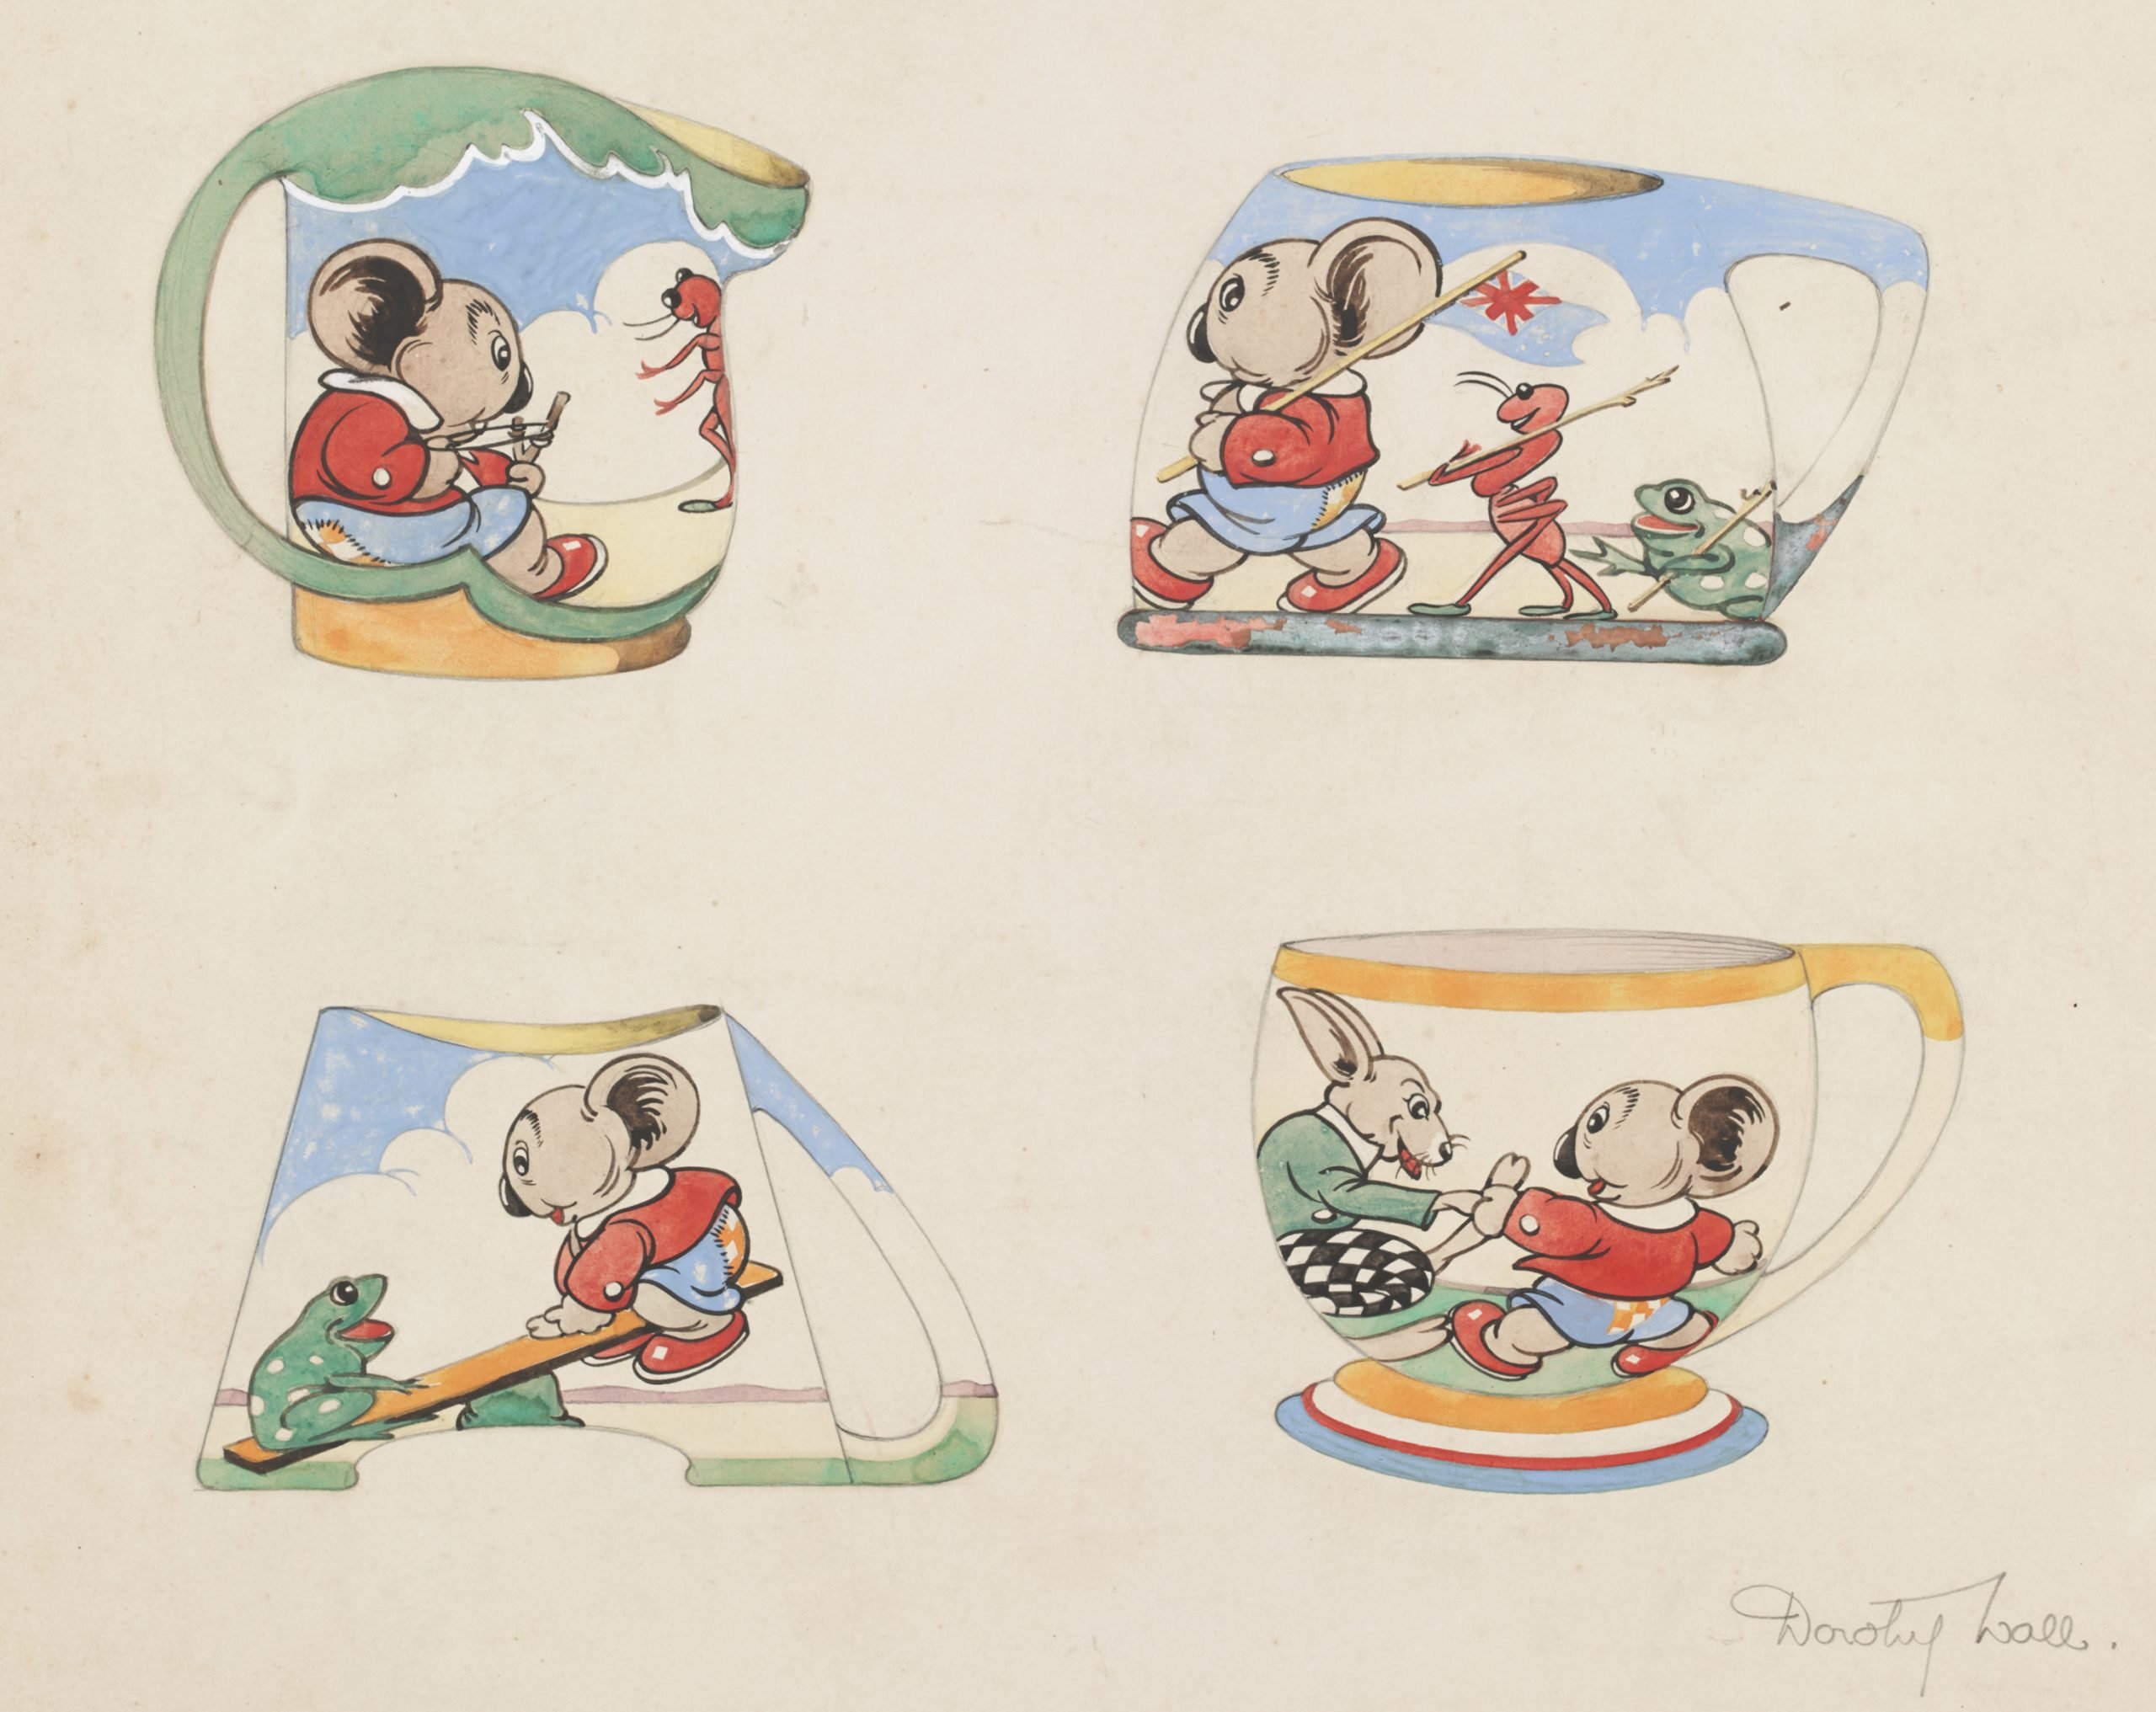 Hand-coloured illustrations of designs for Blinky Bill mugs